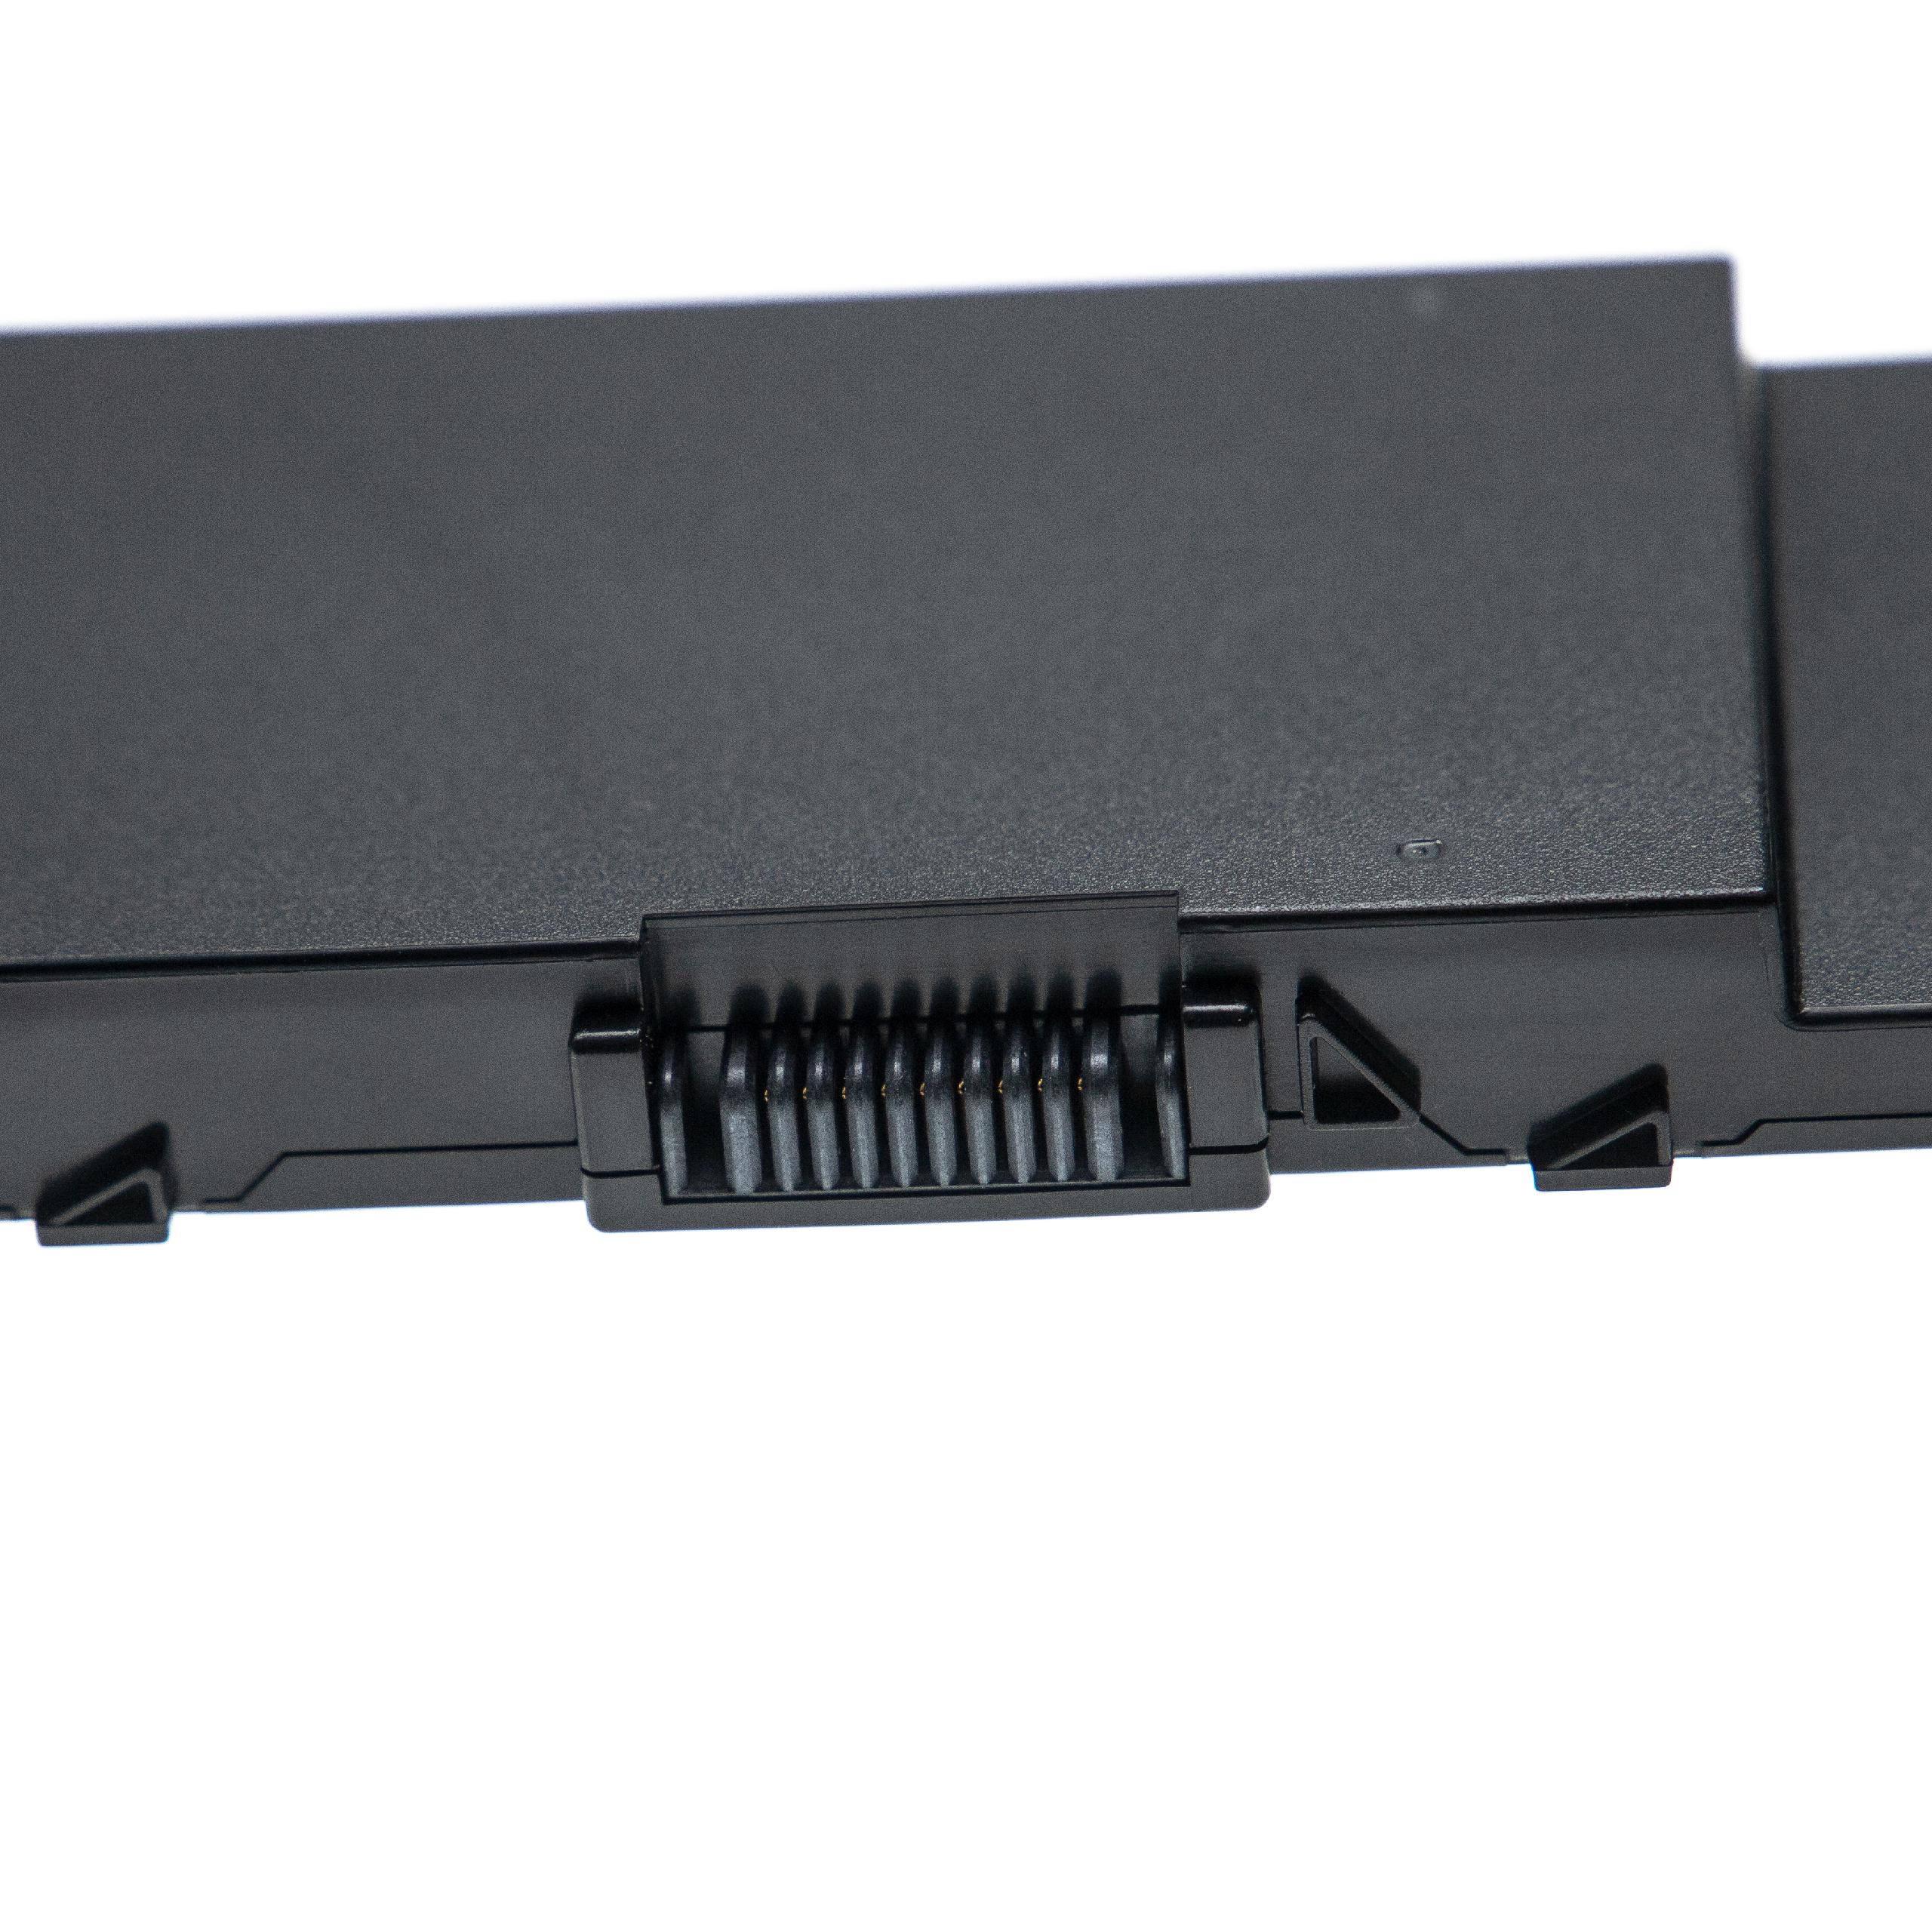 Notebook Battery Replacement for Dell 0FNY7, 1G9VM, 451-BBSB, 451-BBSE, 451-BBSF - 7900mAh 11.1V Li-Ion, black